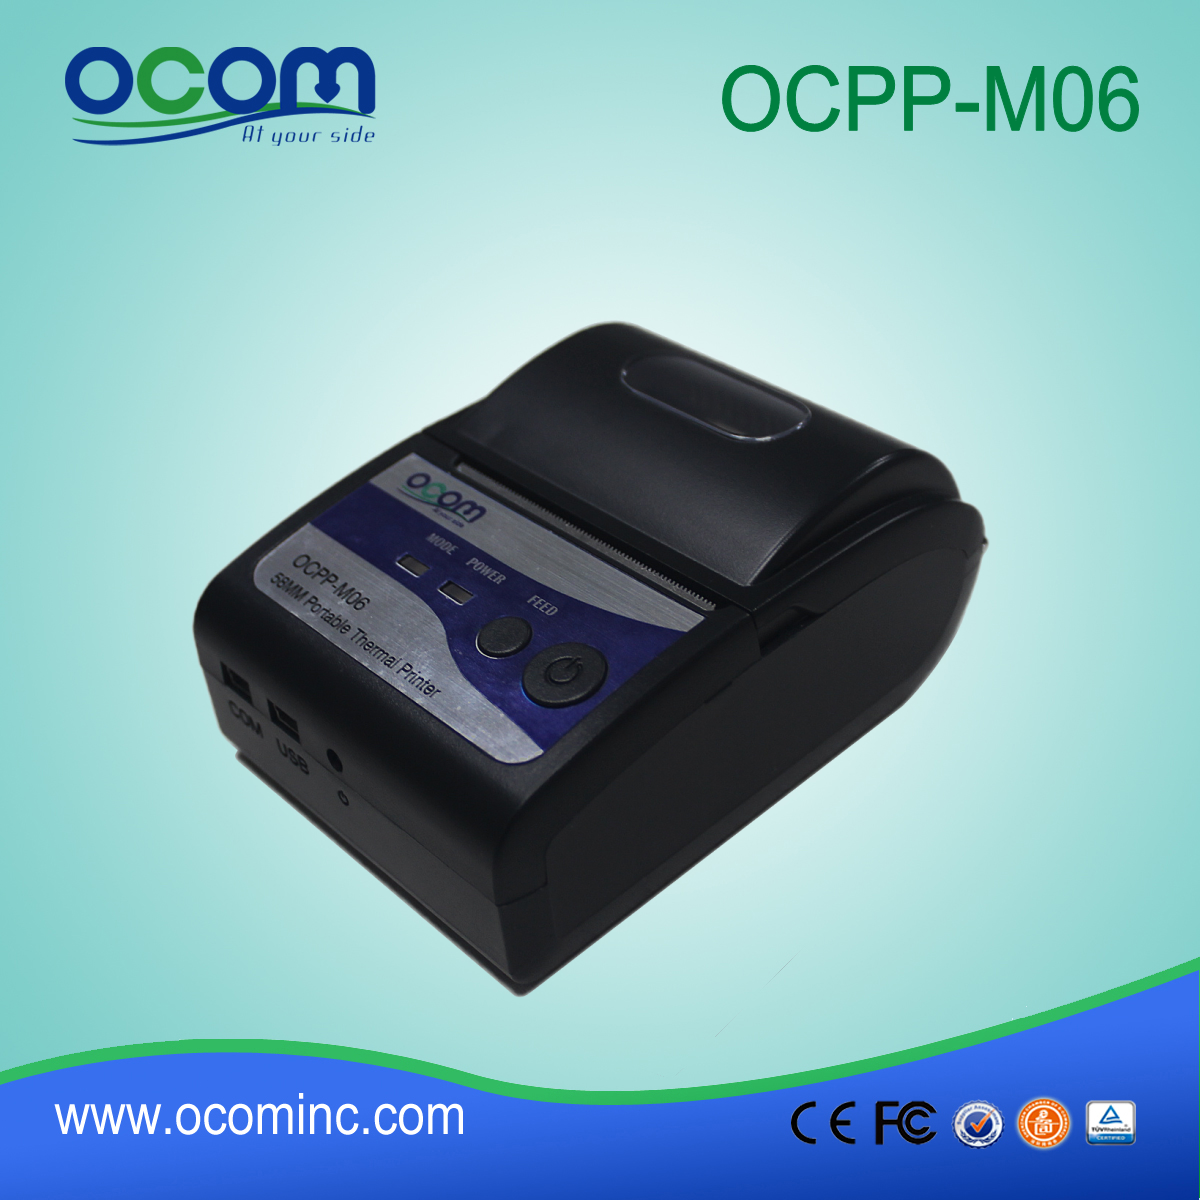 OCPP-M06: OCOM Hot verkopen 58mm mini draagbare Bluetooth thermische printer